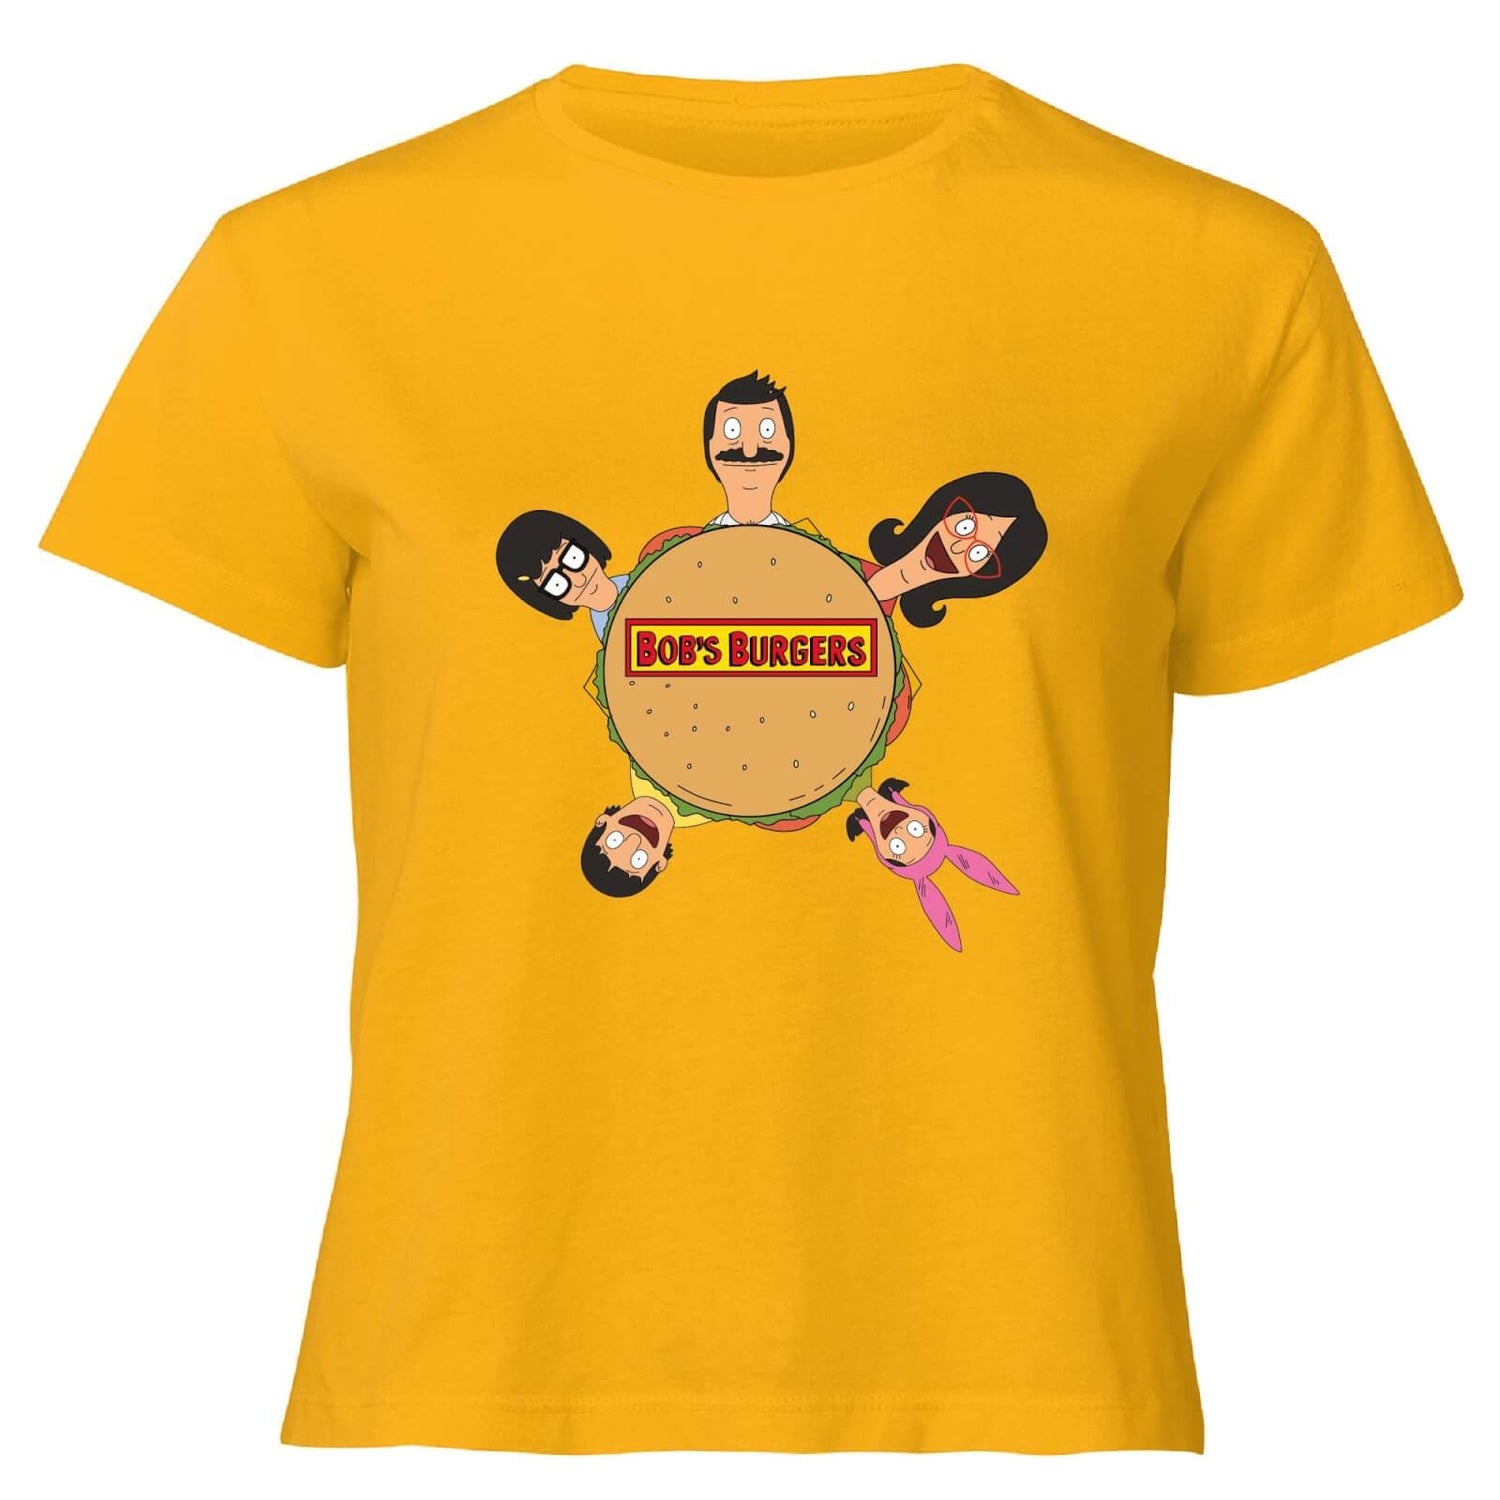 Bob&apos;s Burgers Character Burger Women's Cropped T-Shirt - Mustard